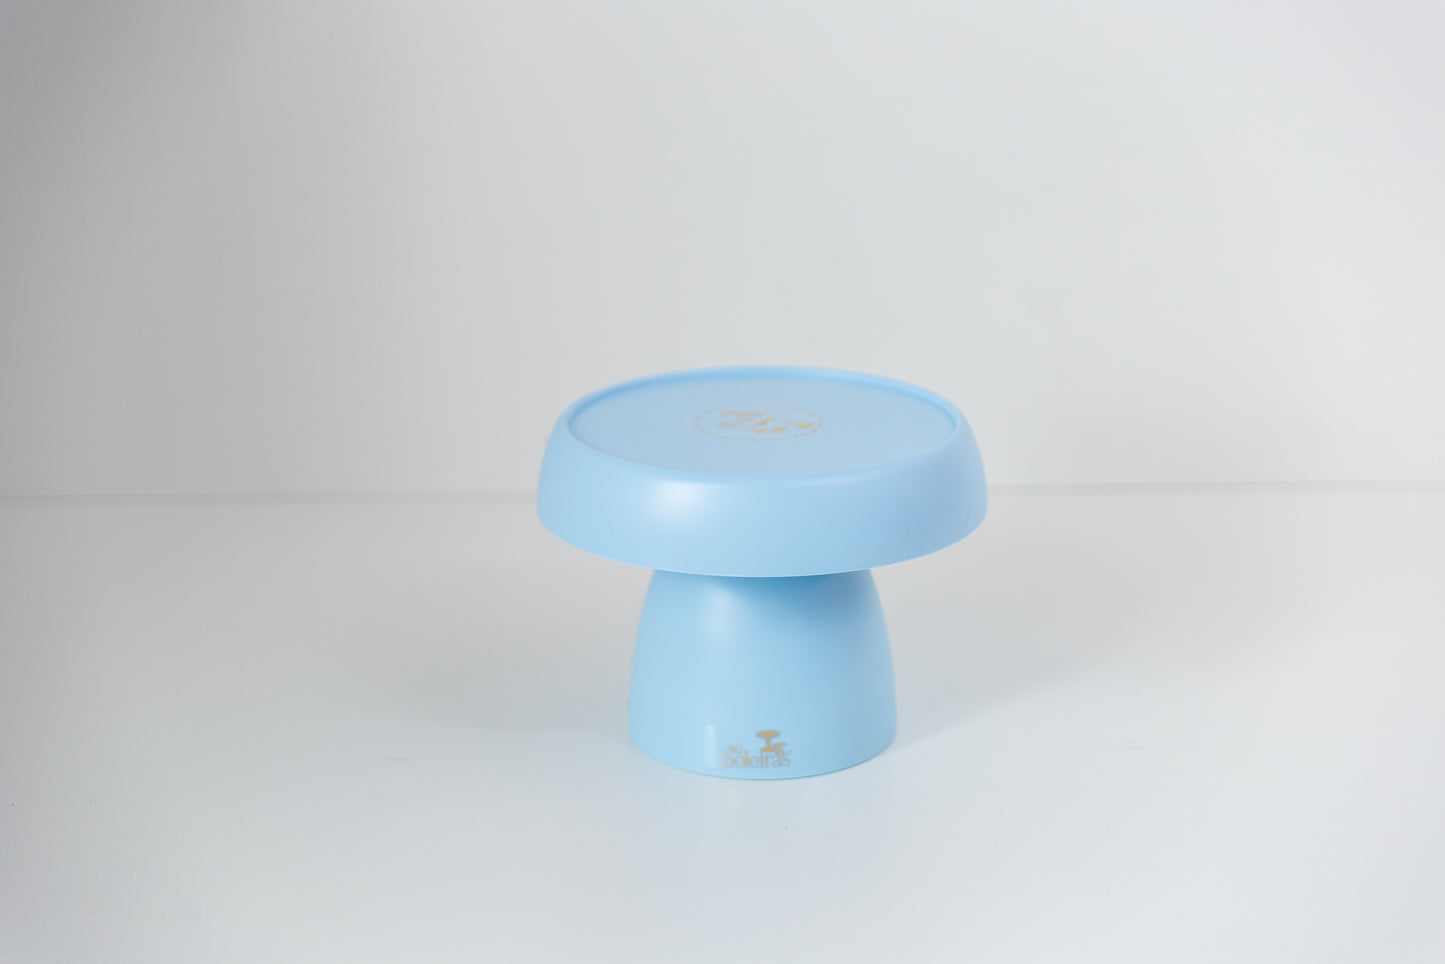 Baby Blue Mushroom Matte Cake stand - 150mmx170mm